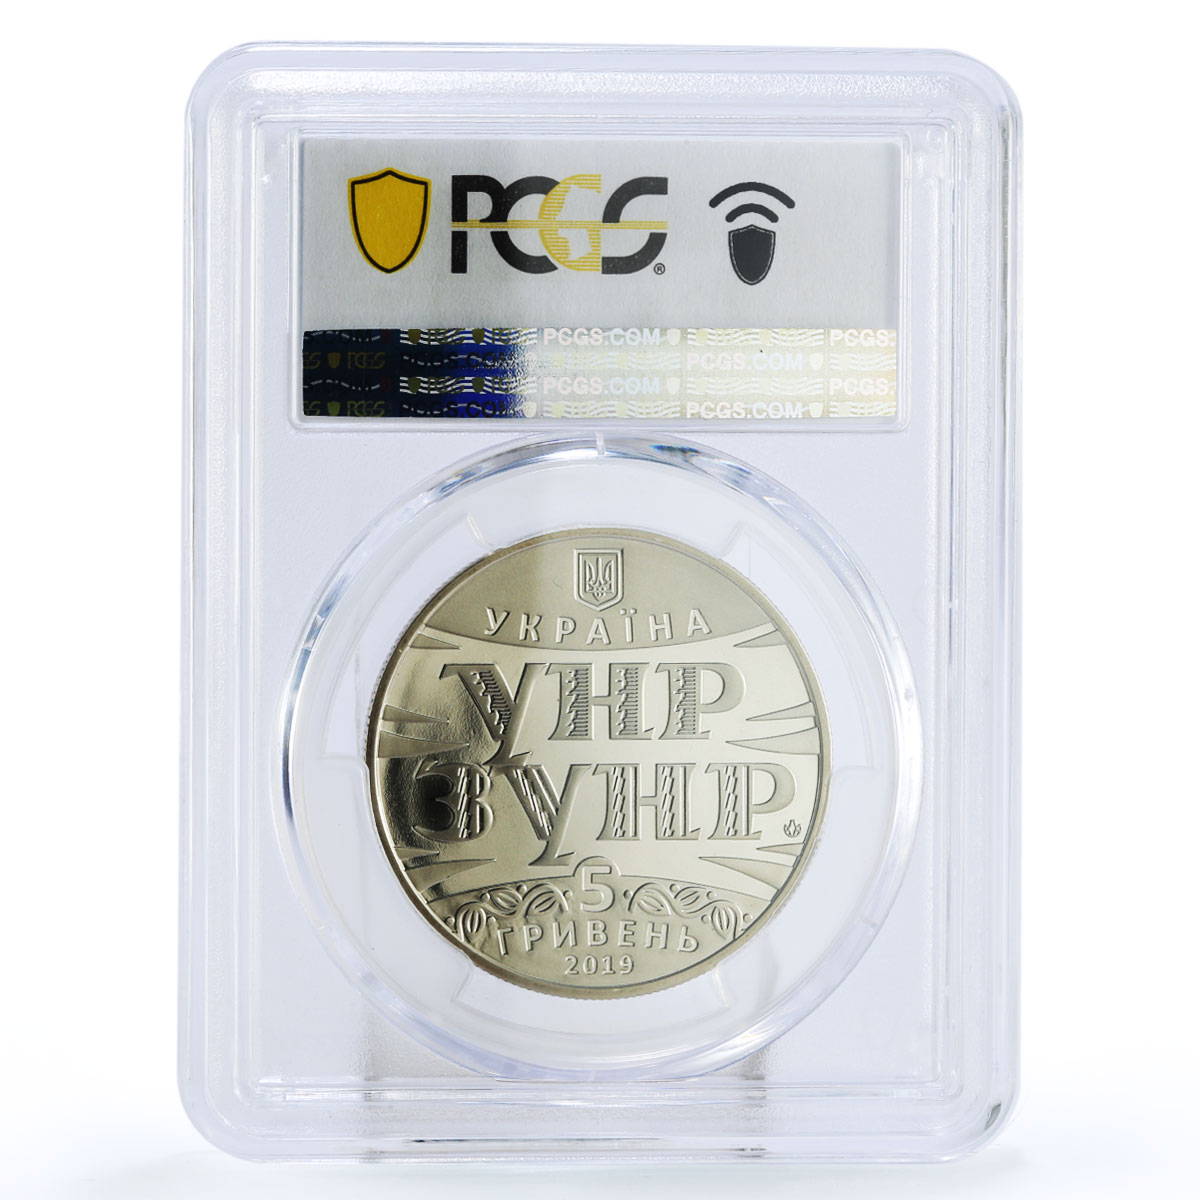 Ukraine 5 hryvnias 100 Years Zluka Unification Act MS69 PCGS nickel coin 2019